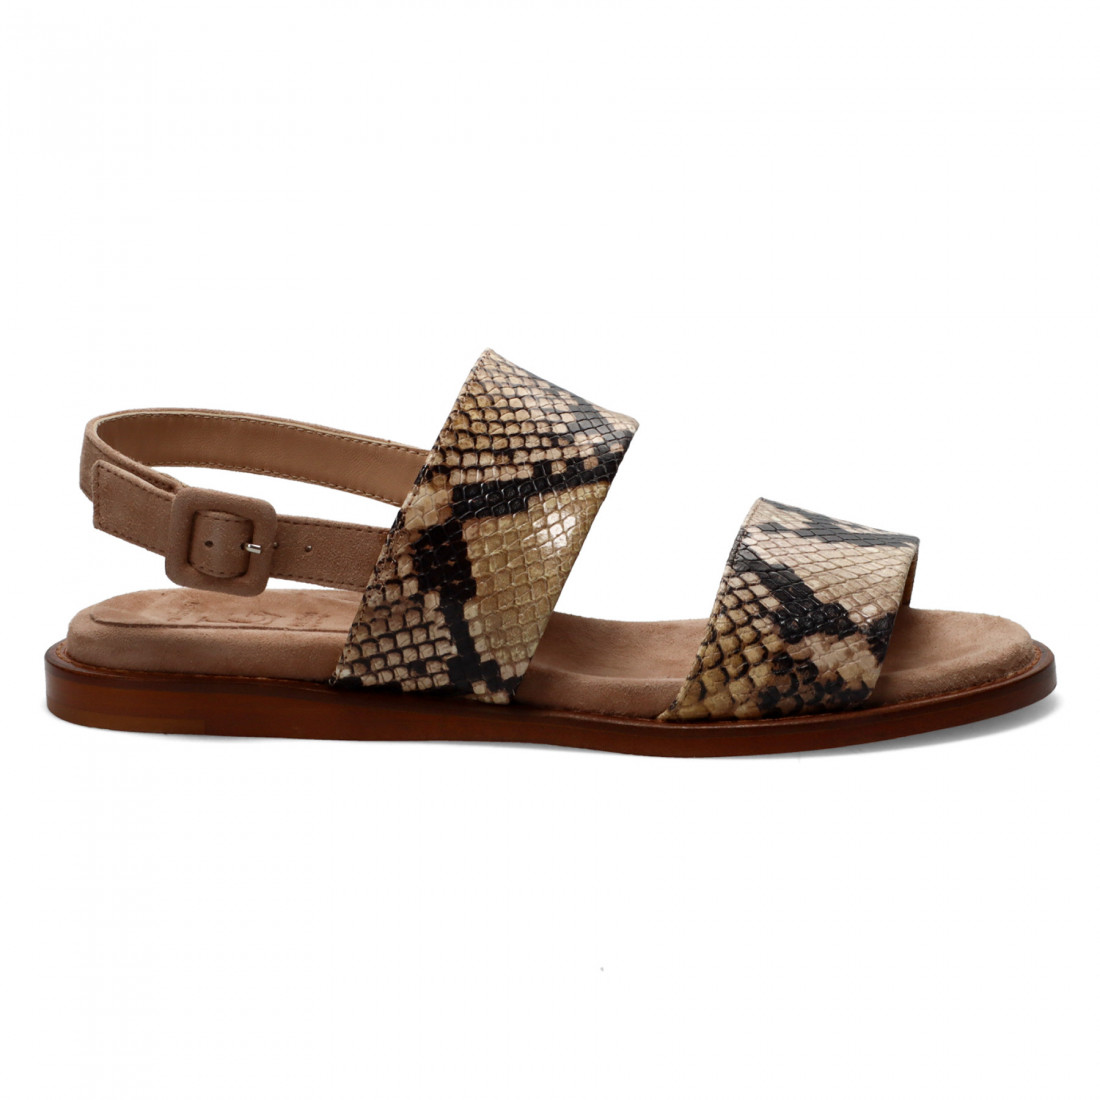 Luca Grossi flat sandal in brown animalier leather